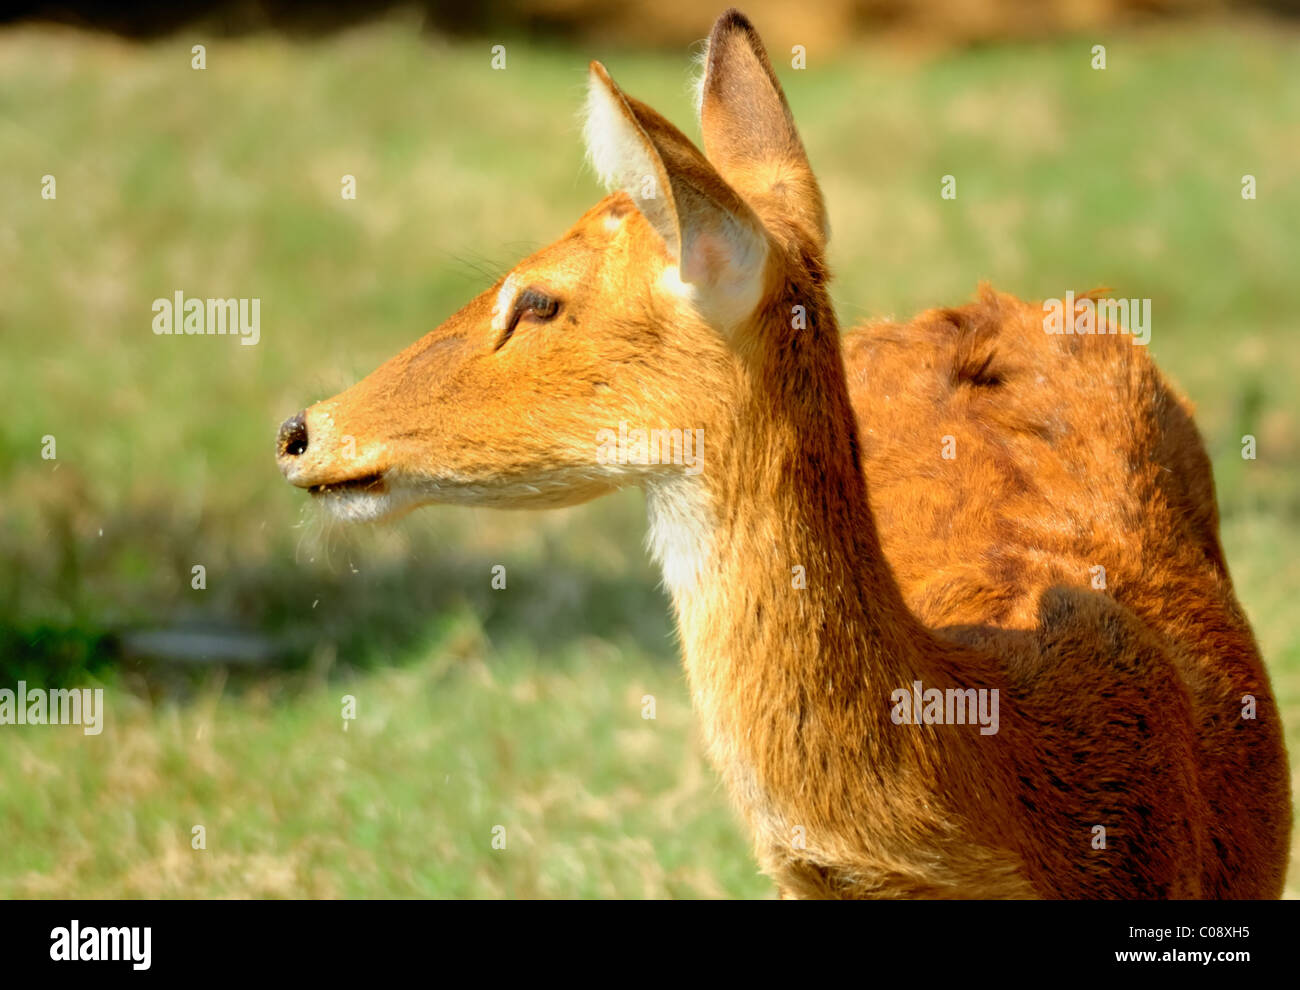 Brow Antlered Deer (Dancing Deer), Rucervus eldii eldii native to Manipur  state of India, Asia with copy space Stock Photo - Alamy